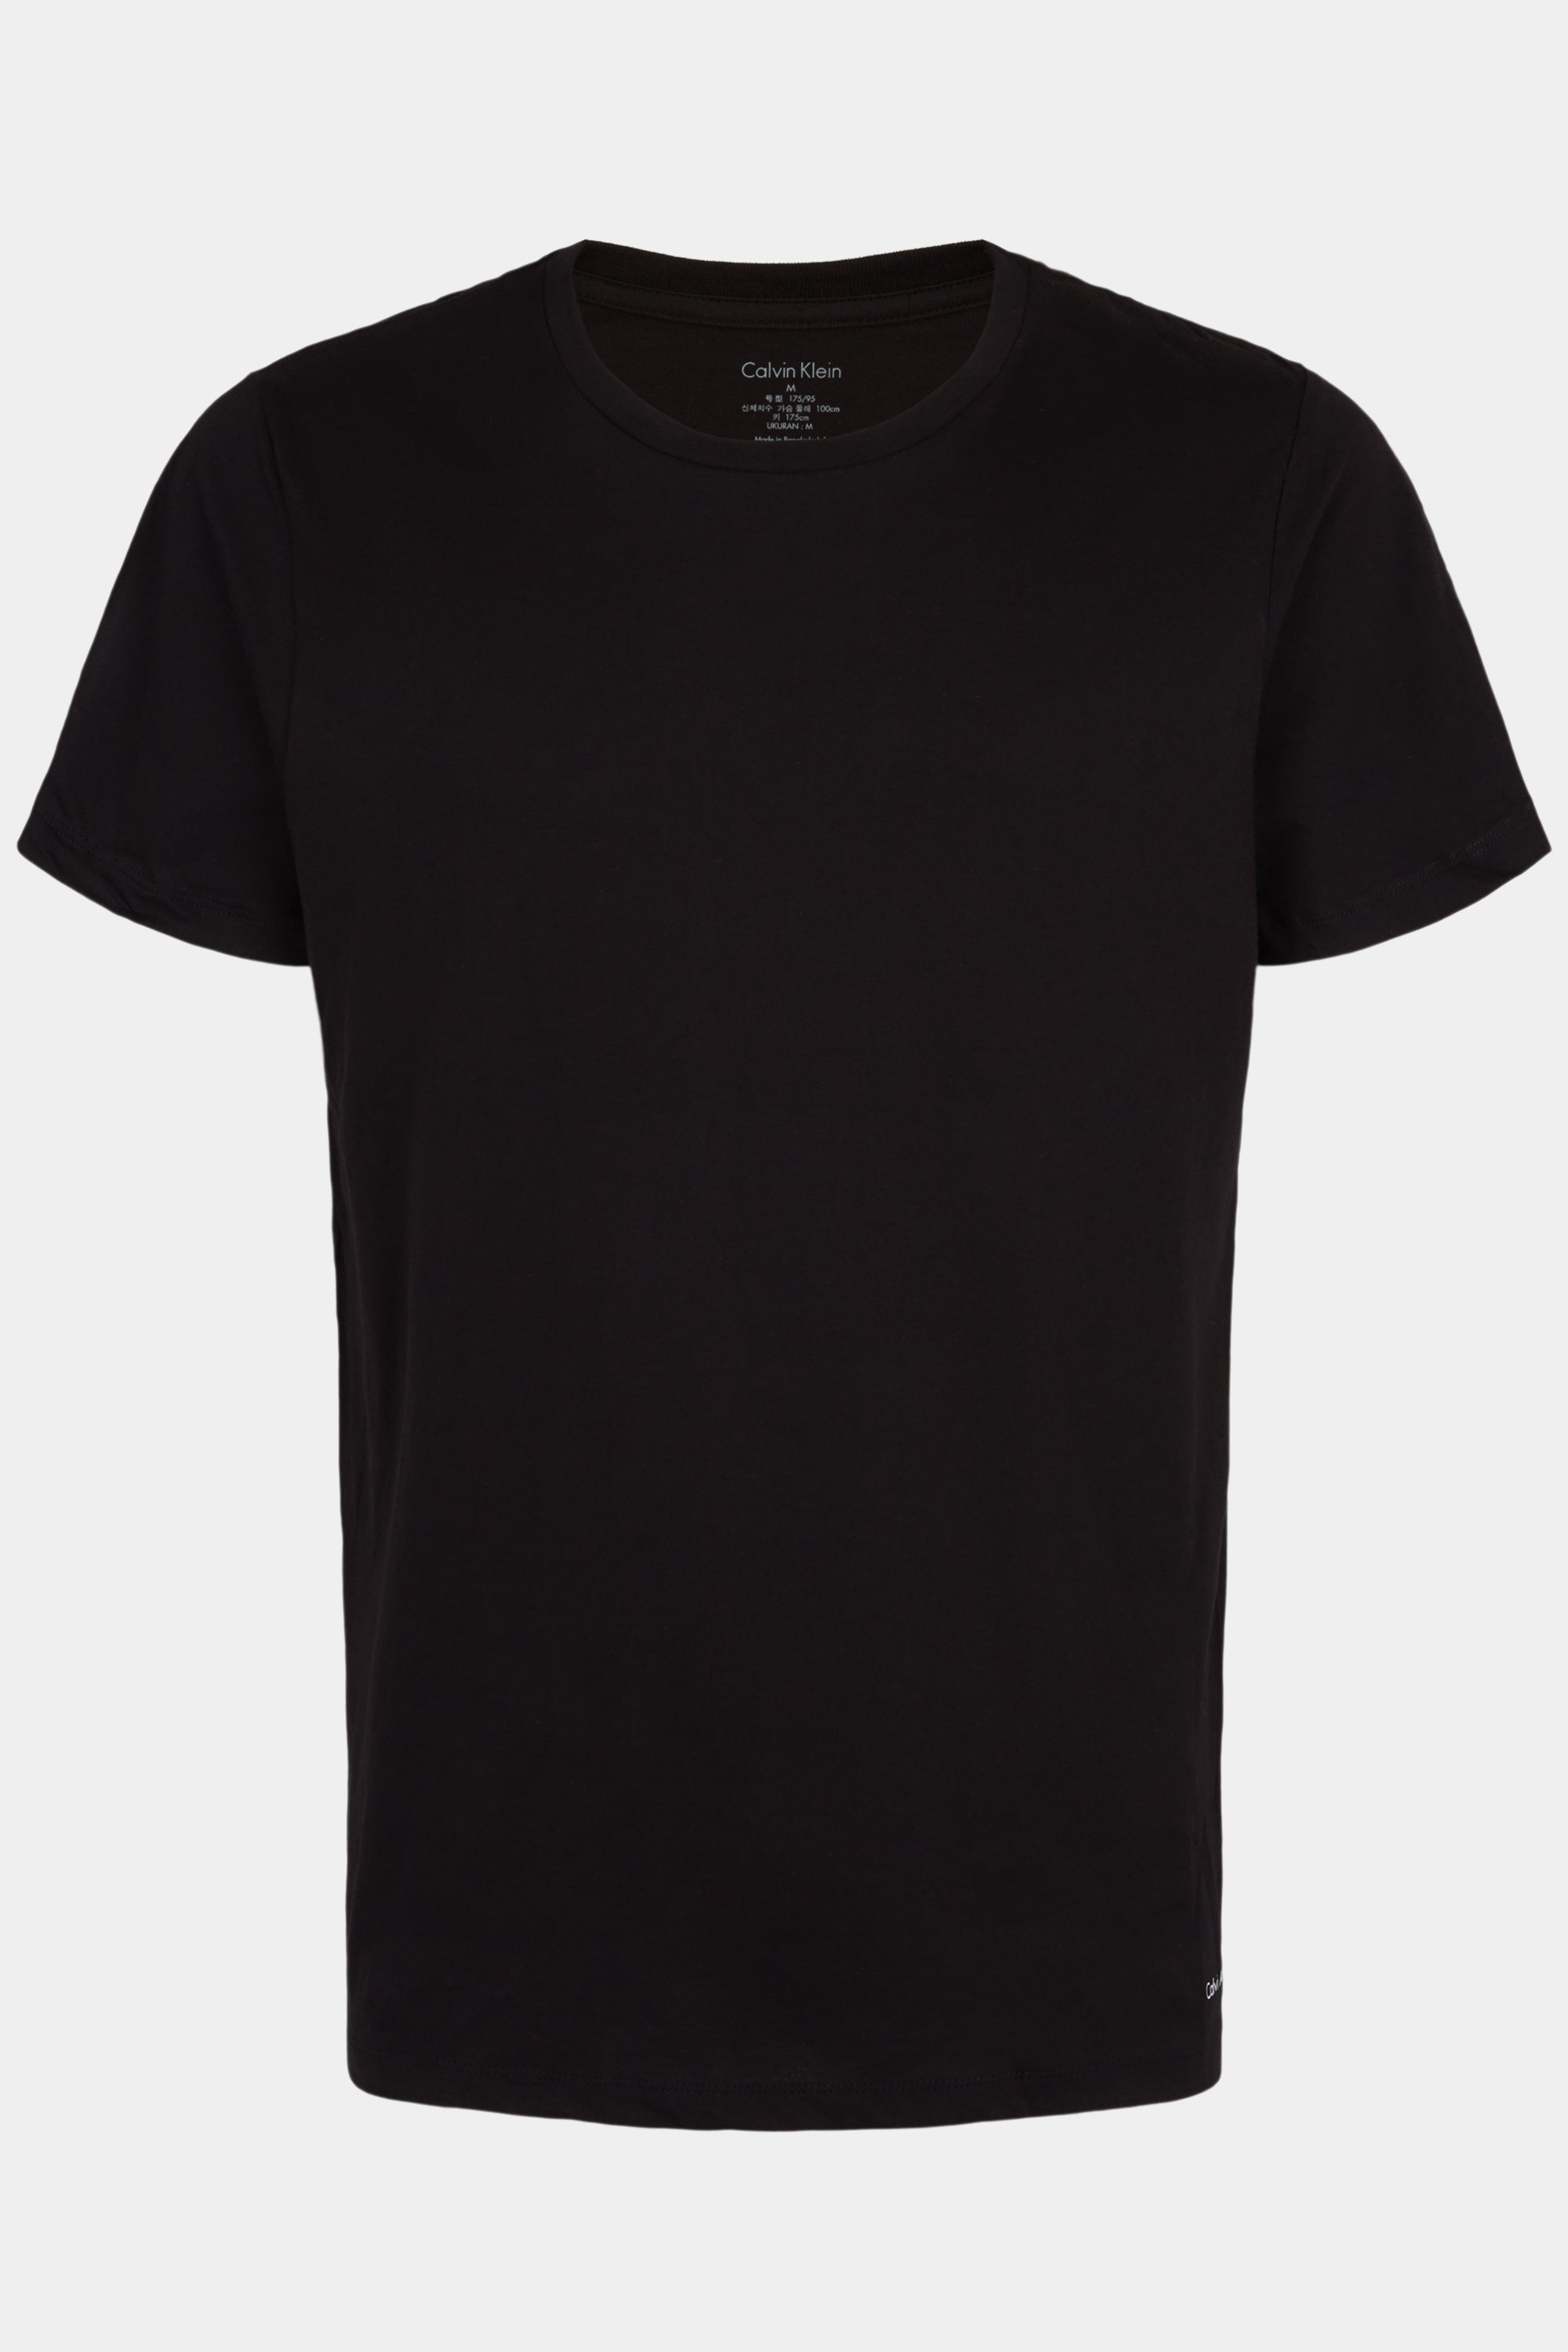 Calvin Klein Black 2-Pack Crew-Neck T-Shirt